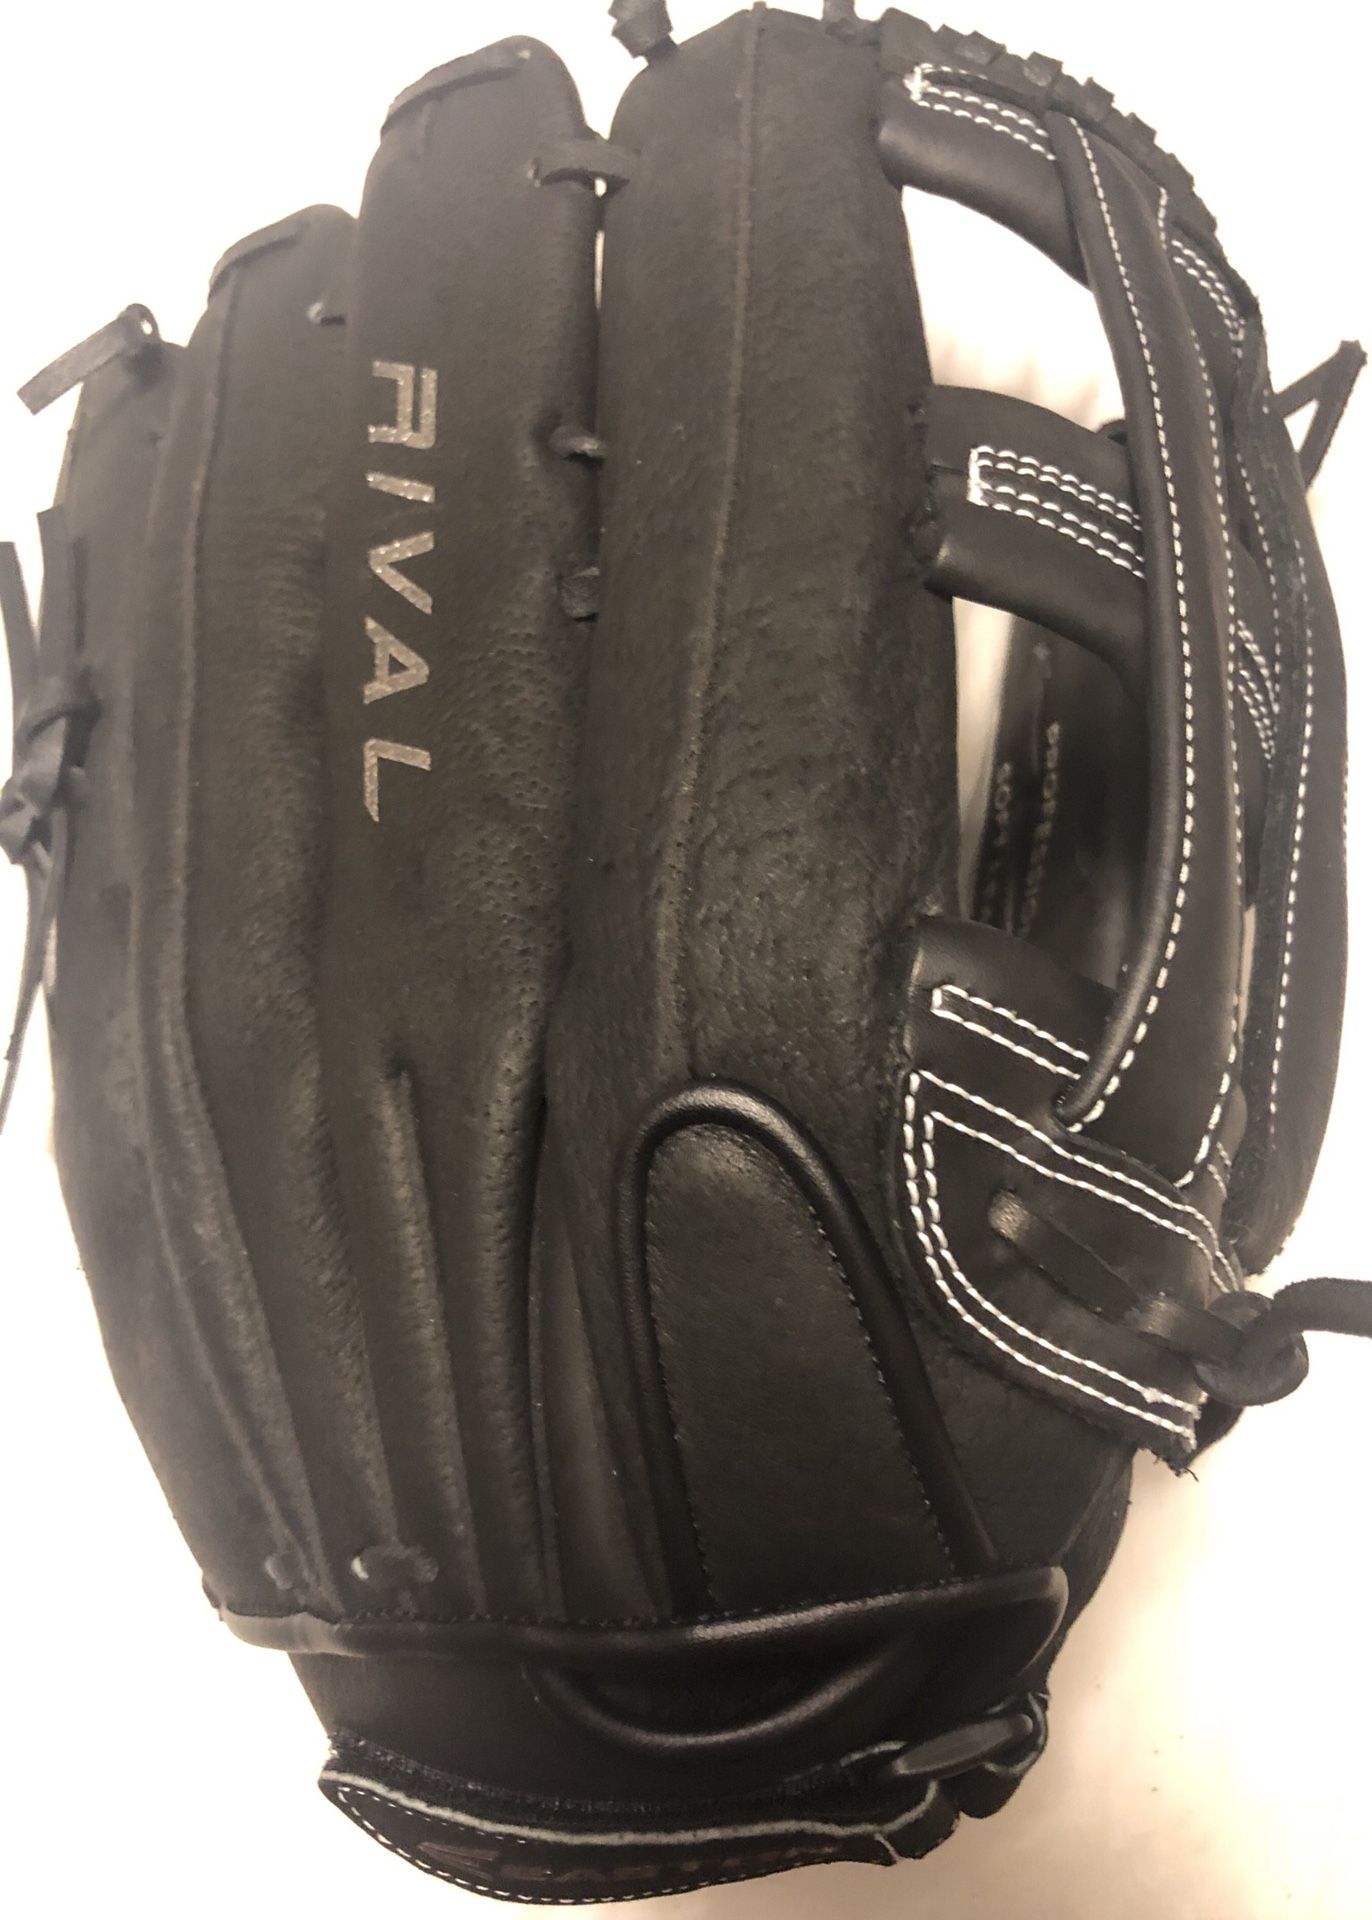 Easton Rival Softball Glove